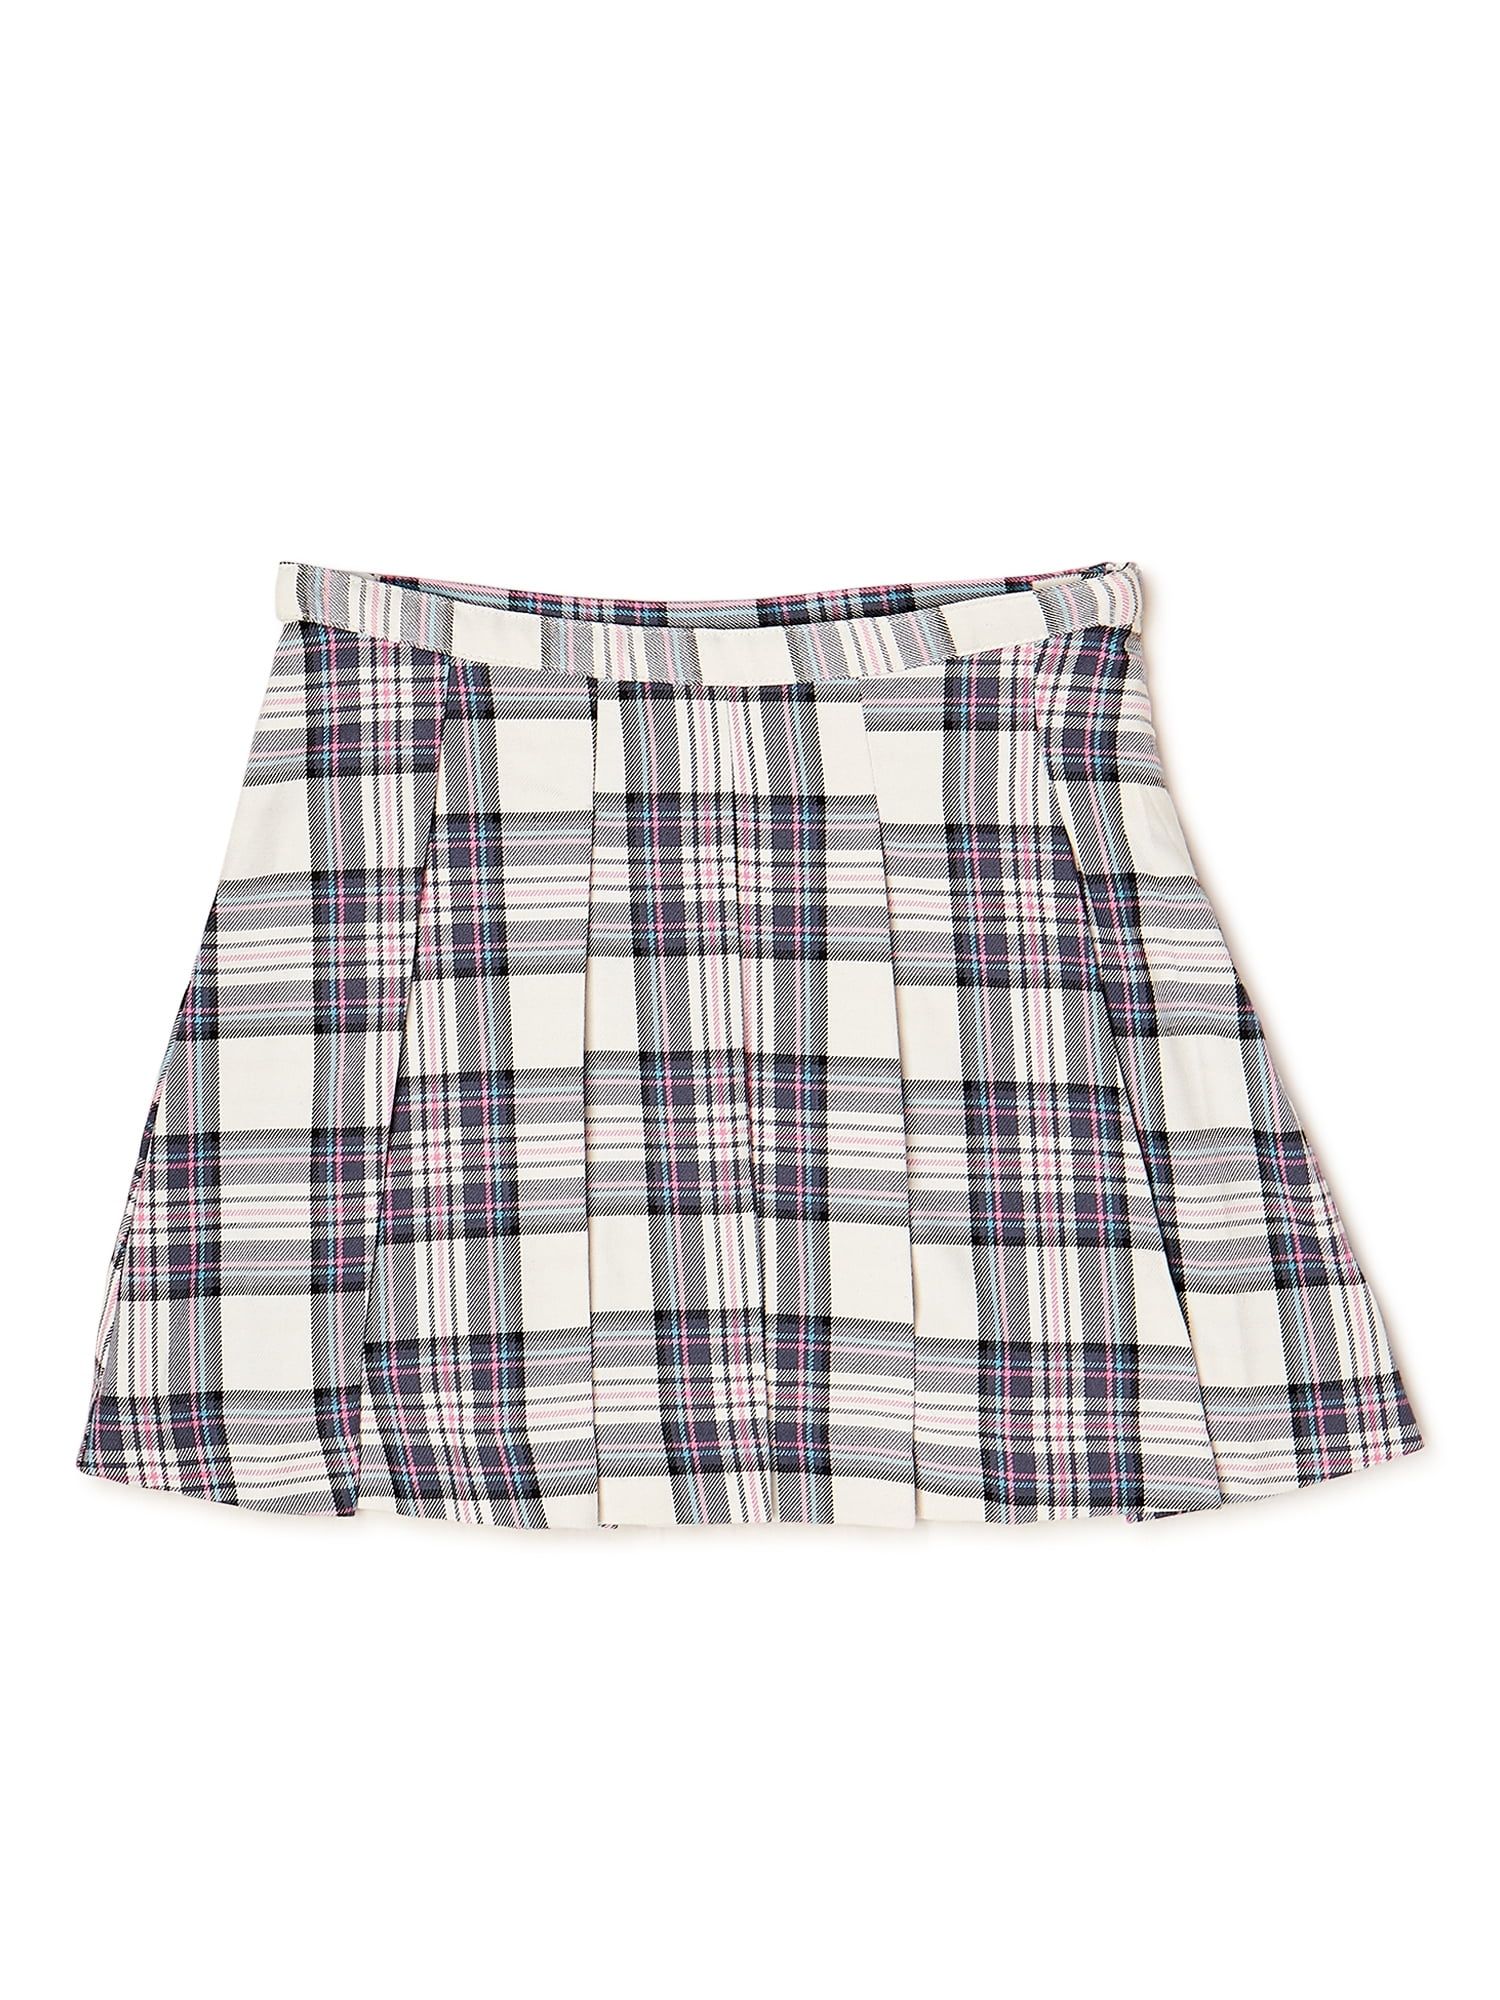 Wonder Nation Girls Pleated Skirt, Sizes 4-18 & Plus | Walmart (US)